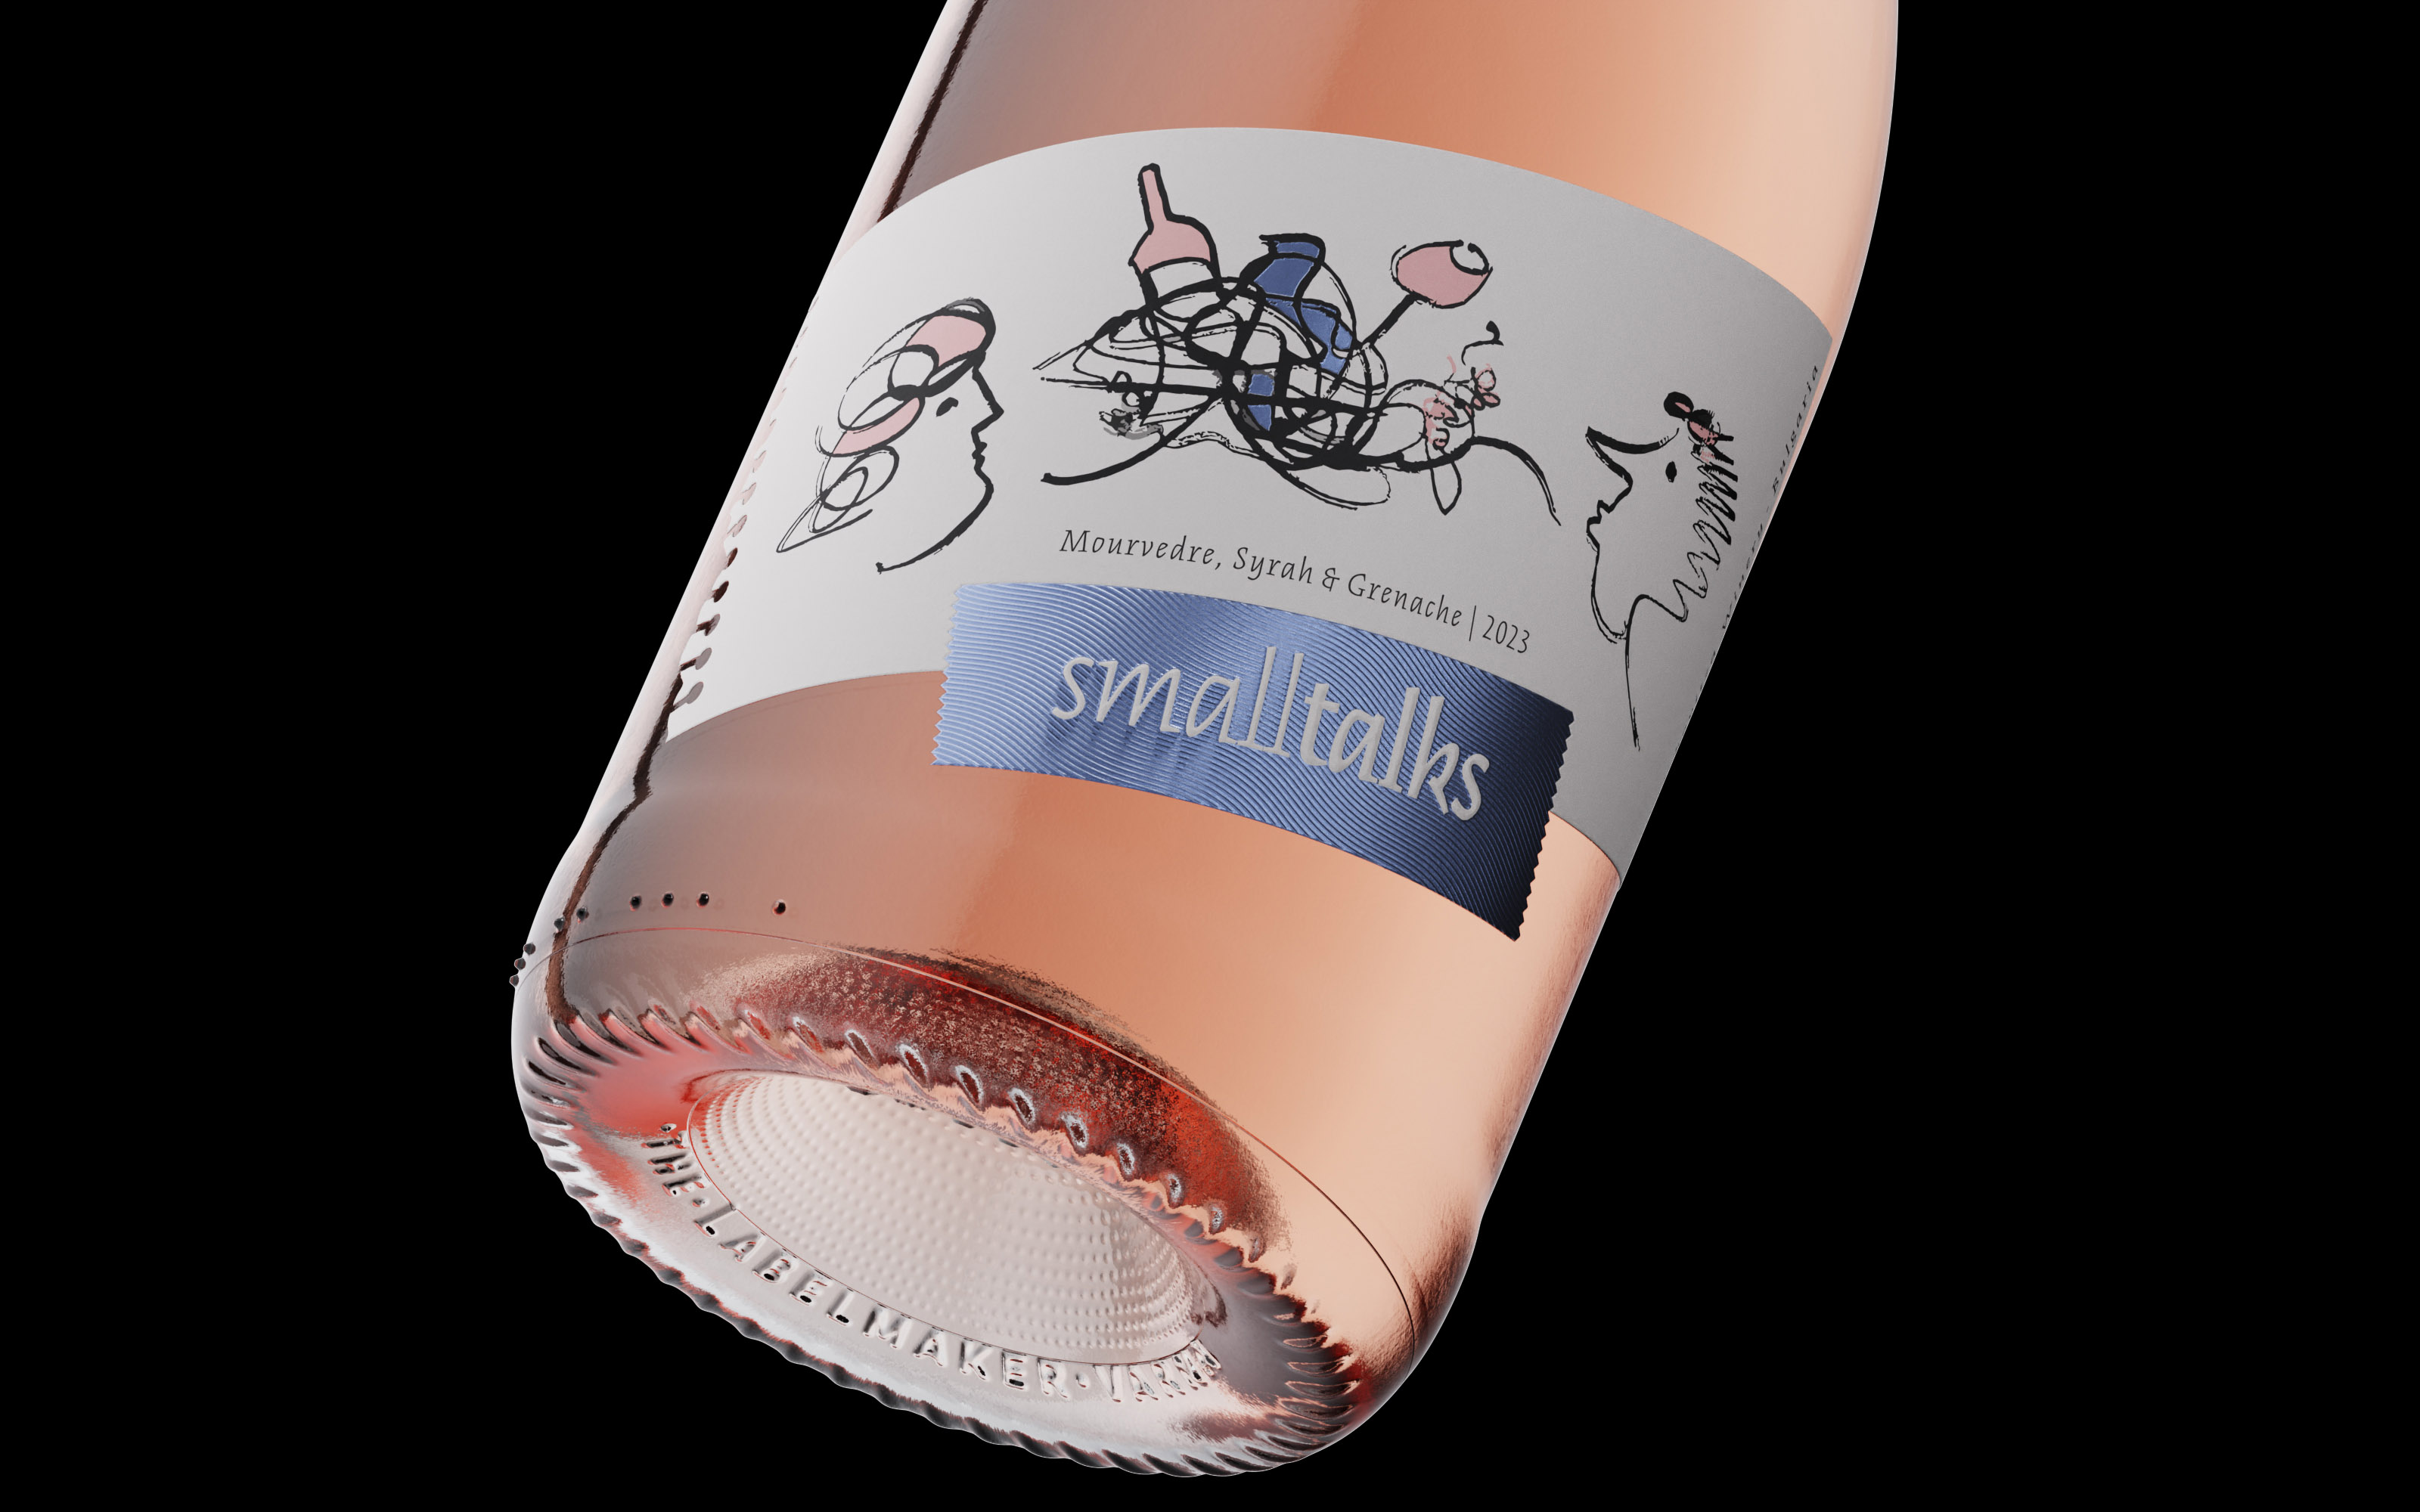 Smalltalks Rosé Artistic Wine Label Design by the Labelmaker